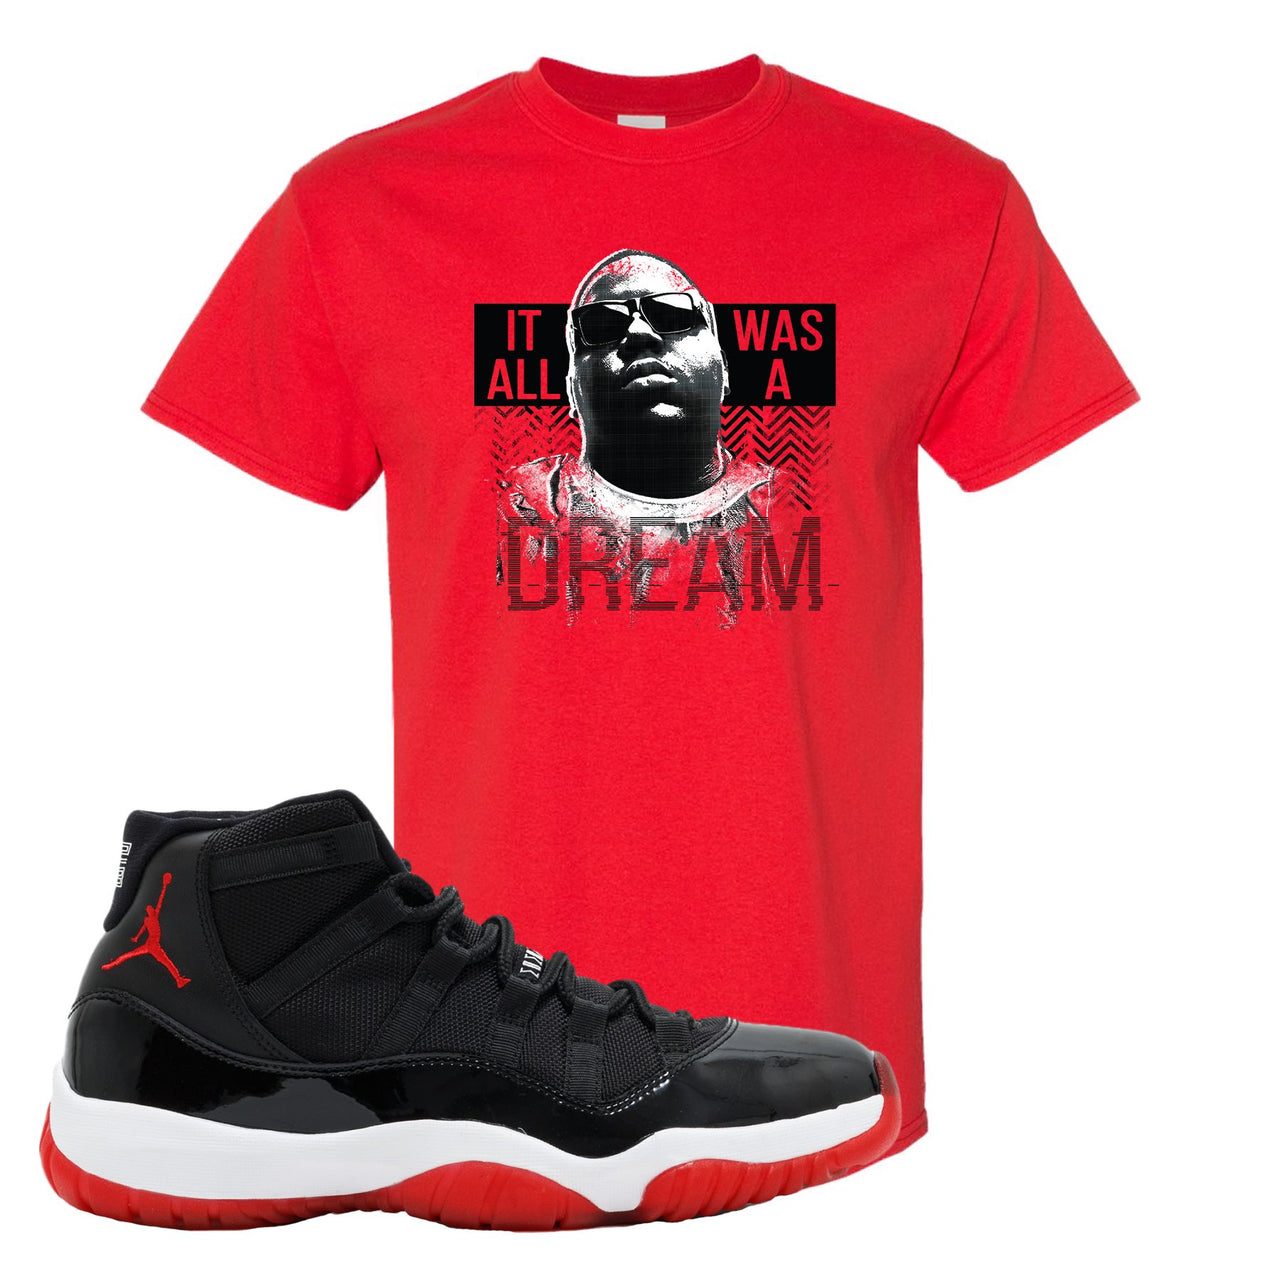 Jordan 11 Bred It Was All A Dream Red Sneaker Hook Up T-Shirt